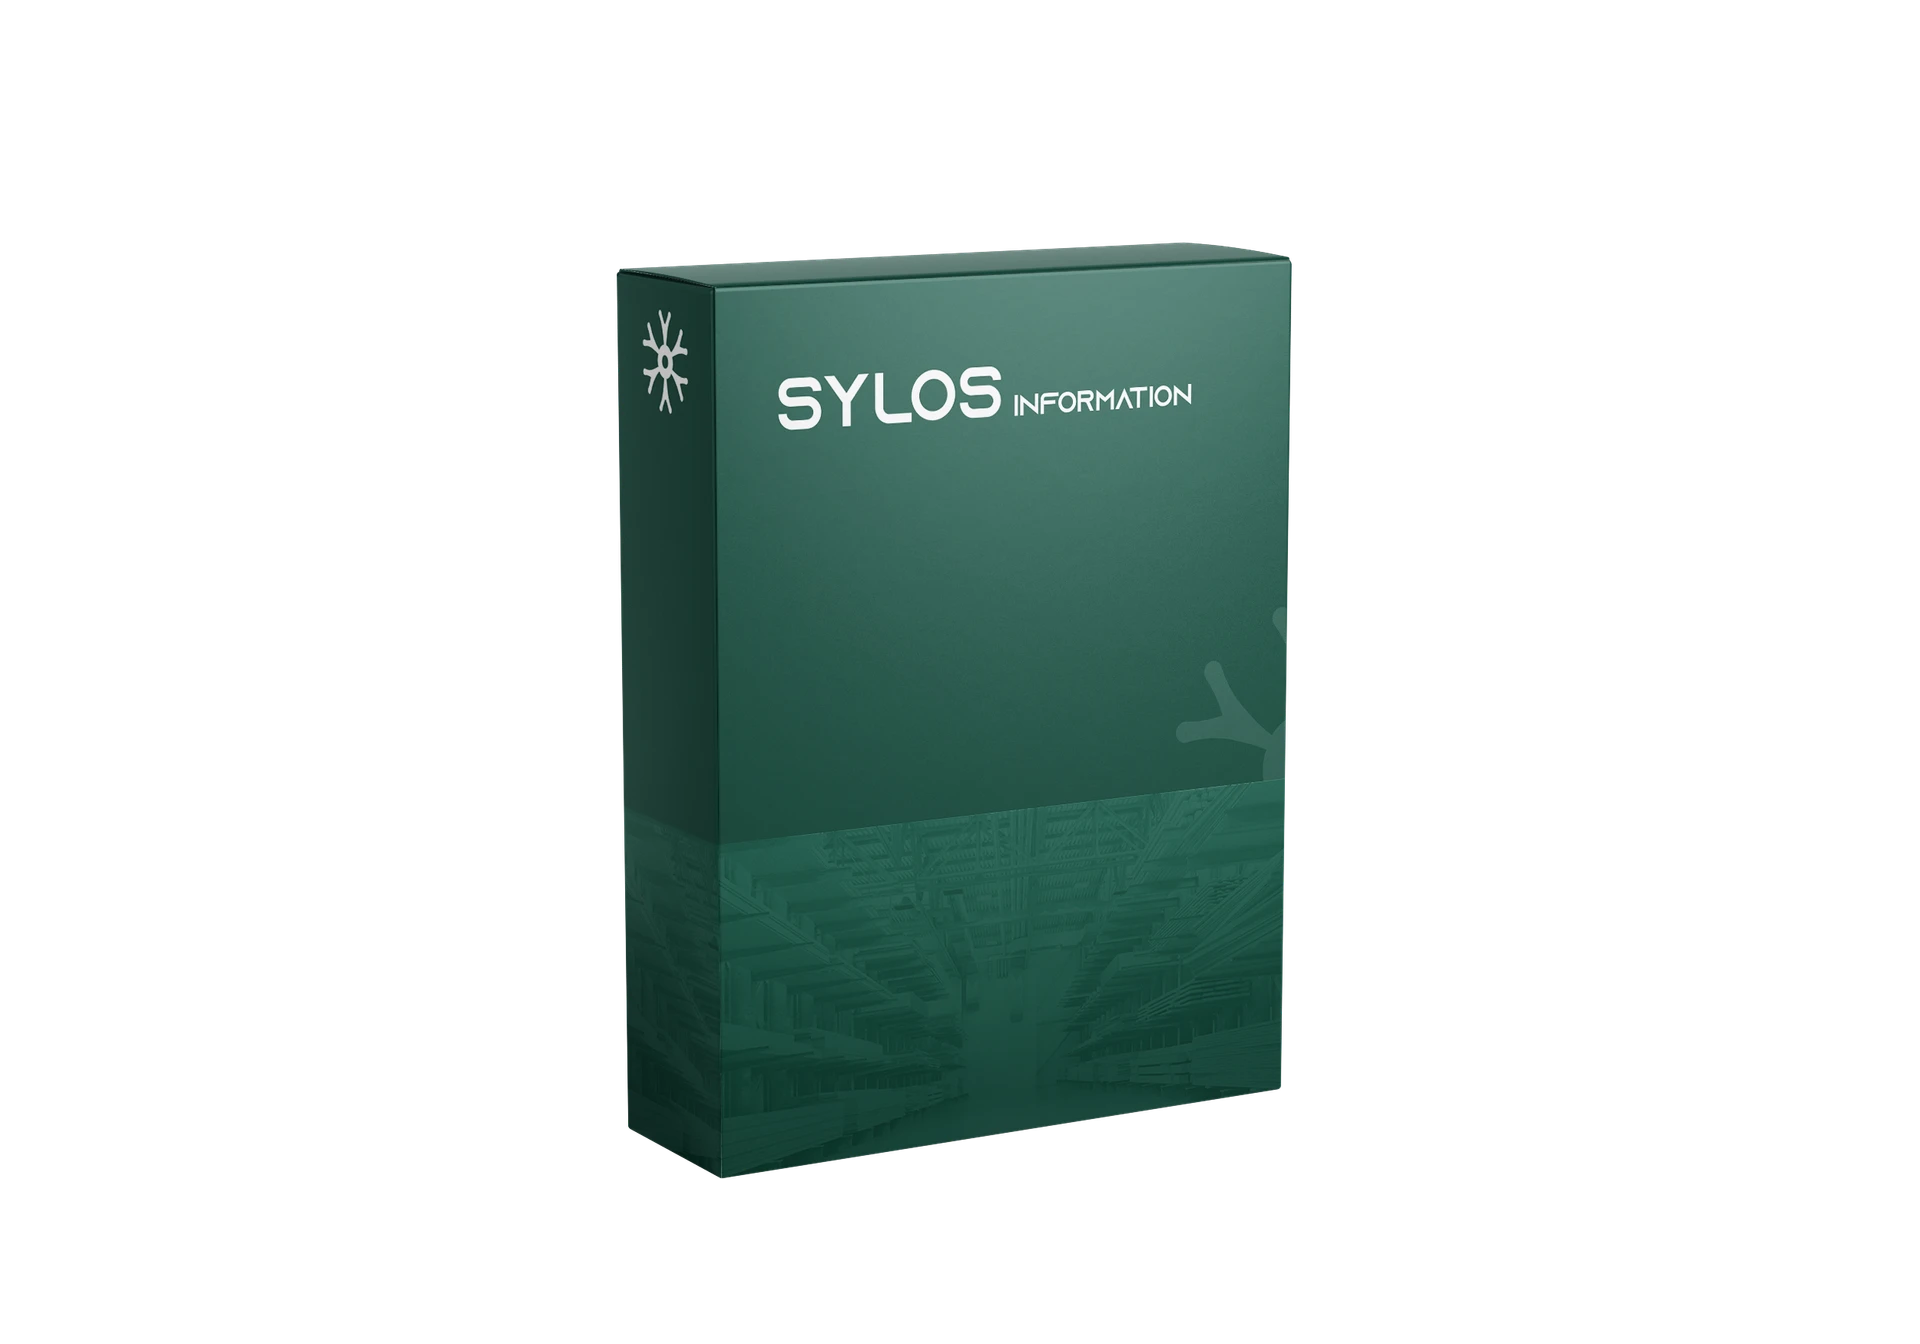 Sylos information